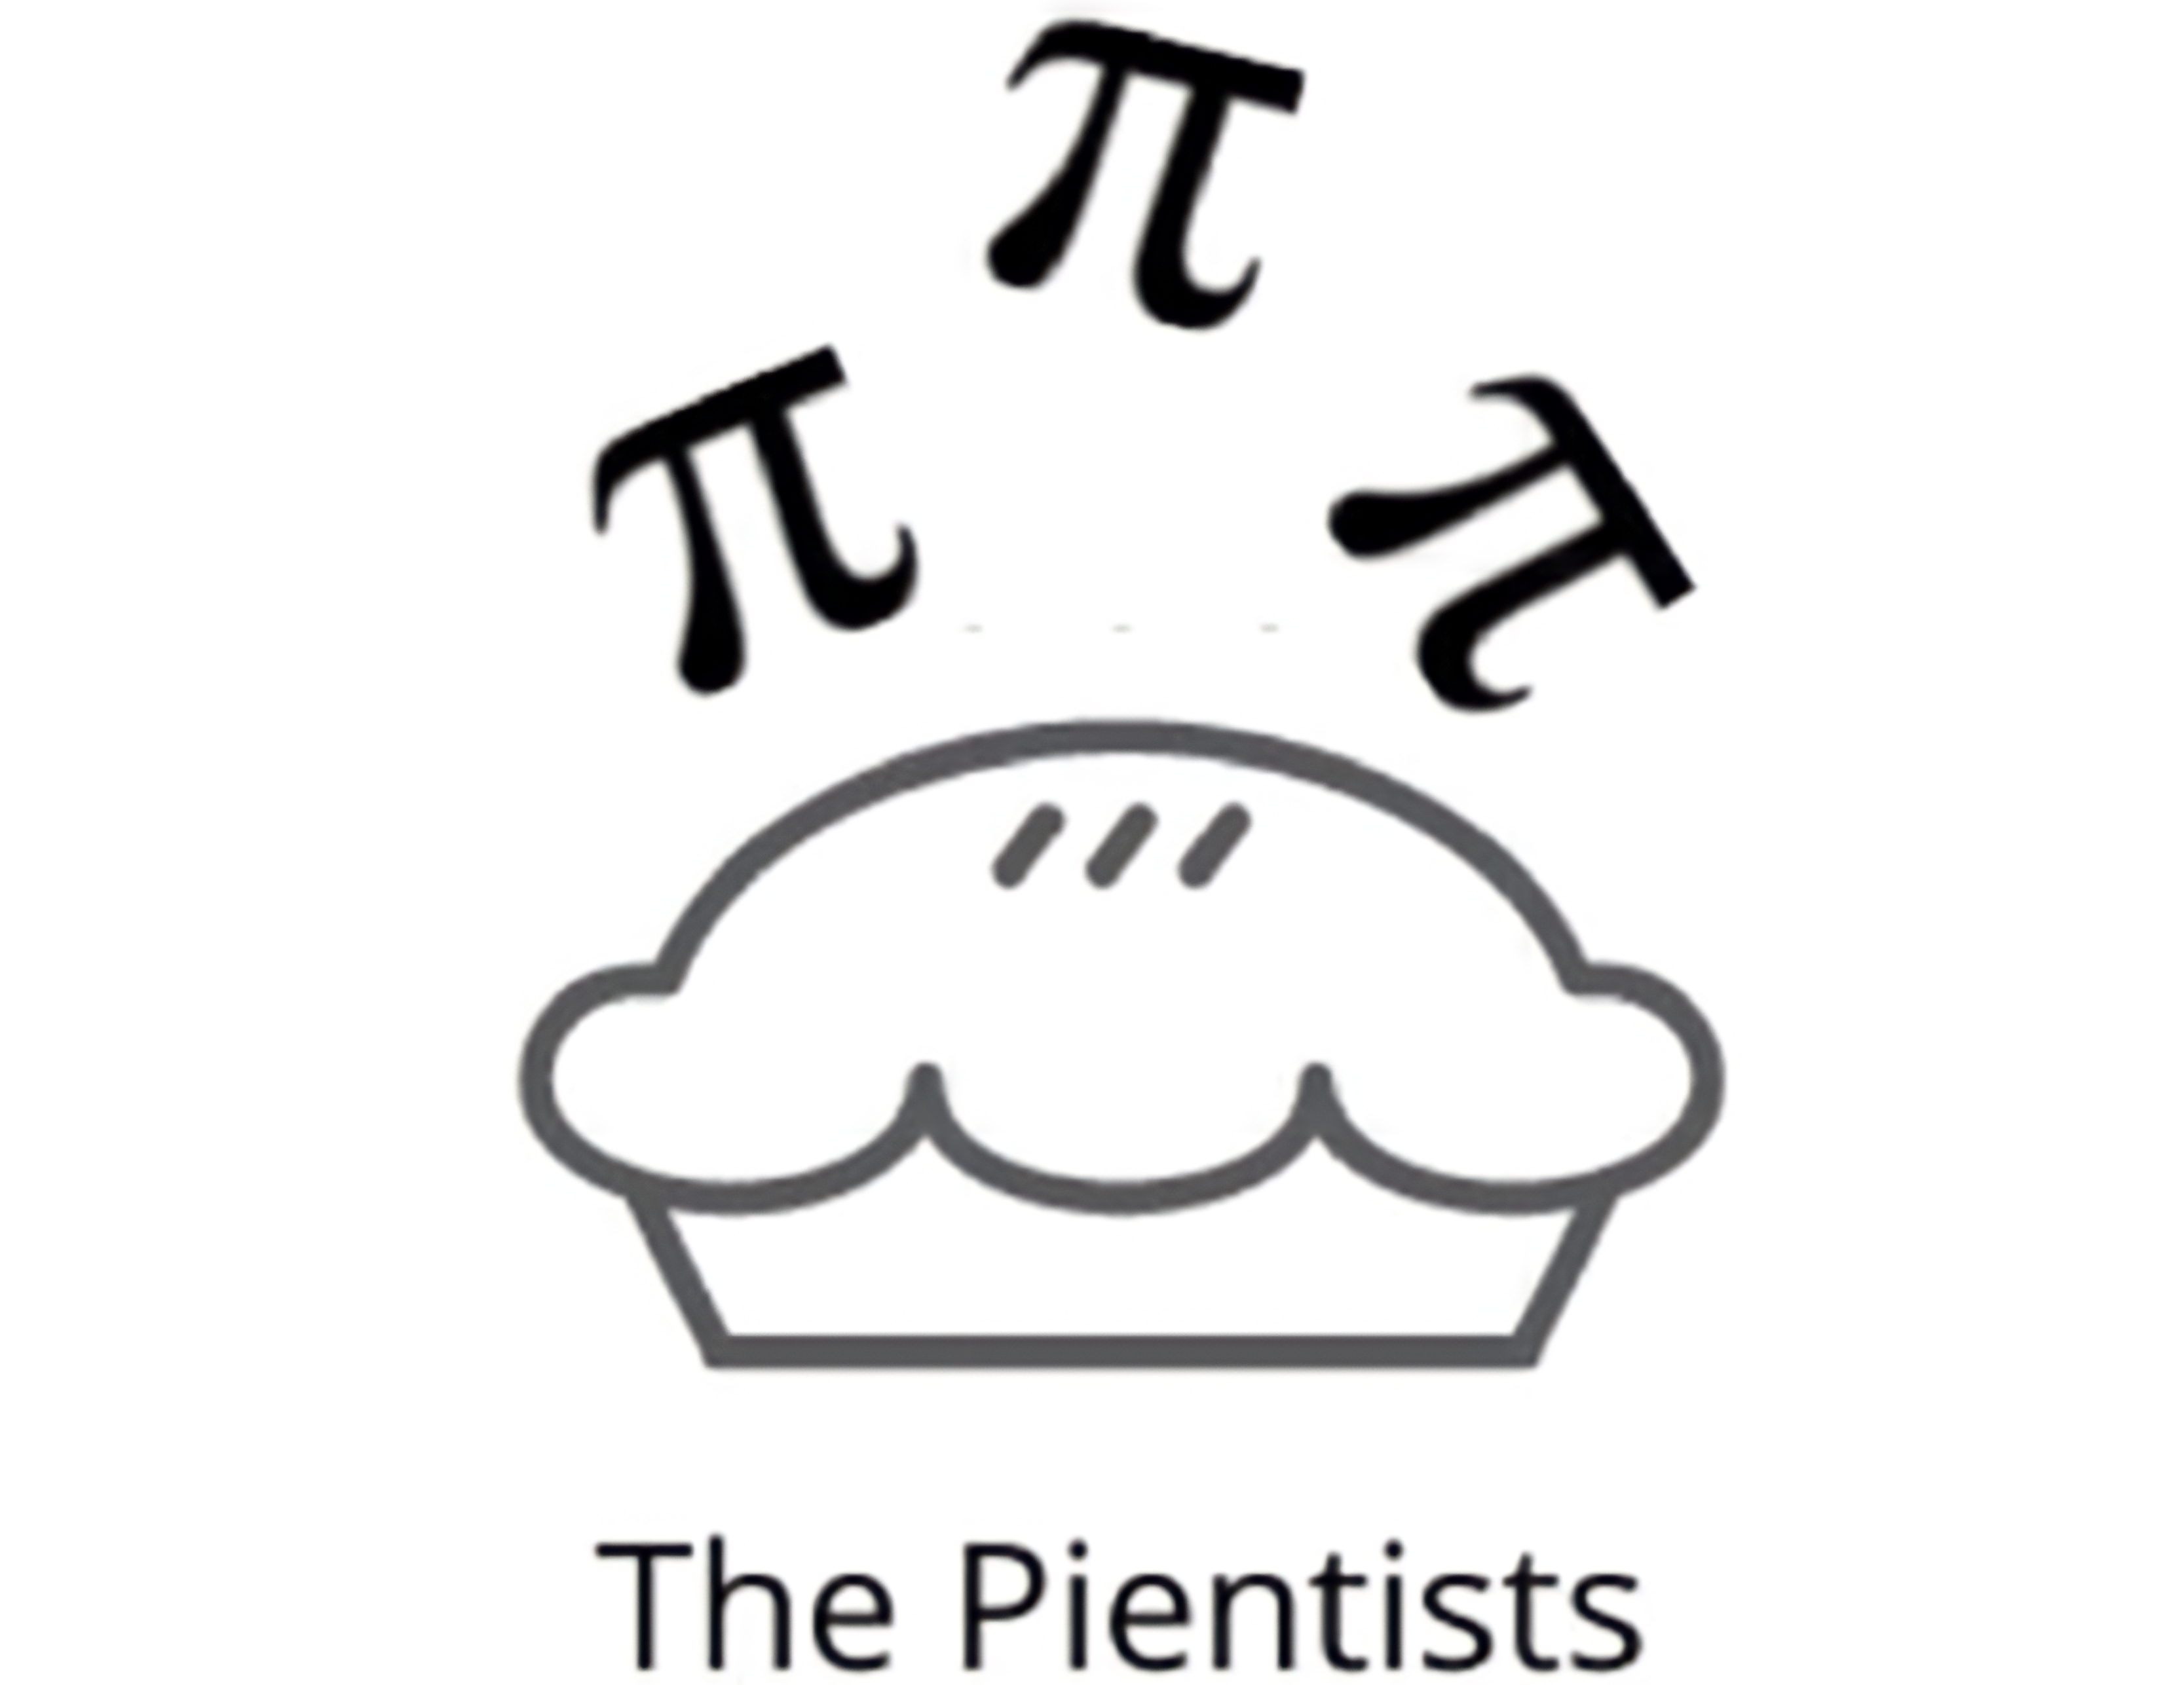 Figure 4. Pientists’ team logo